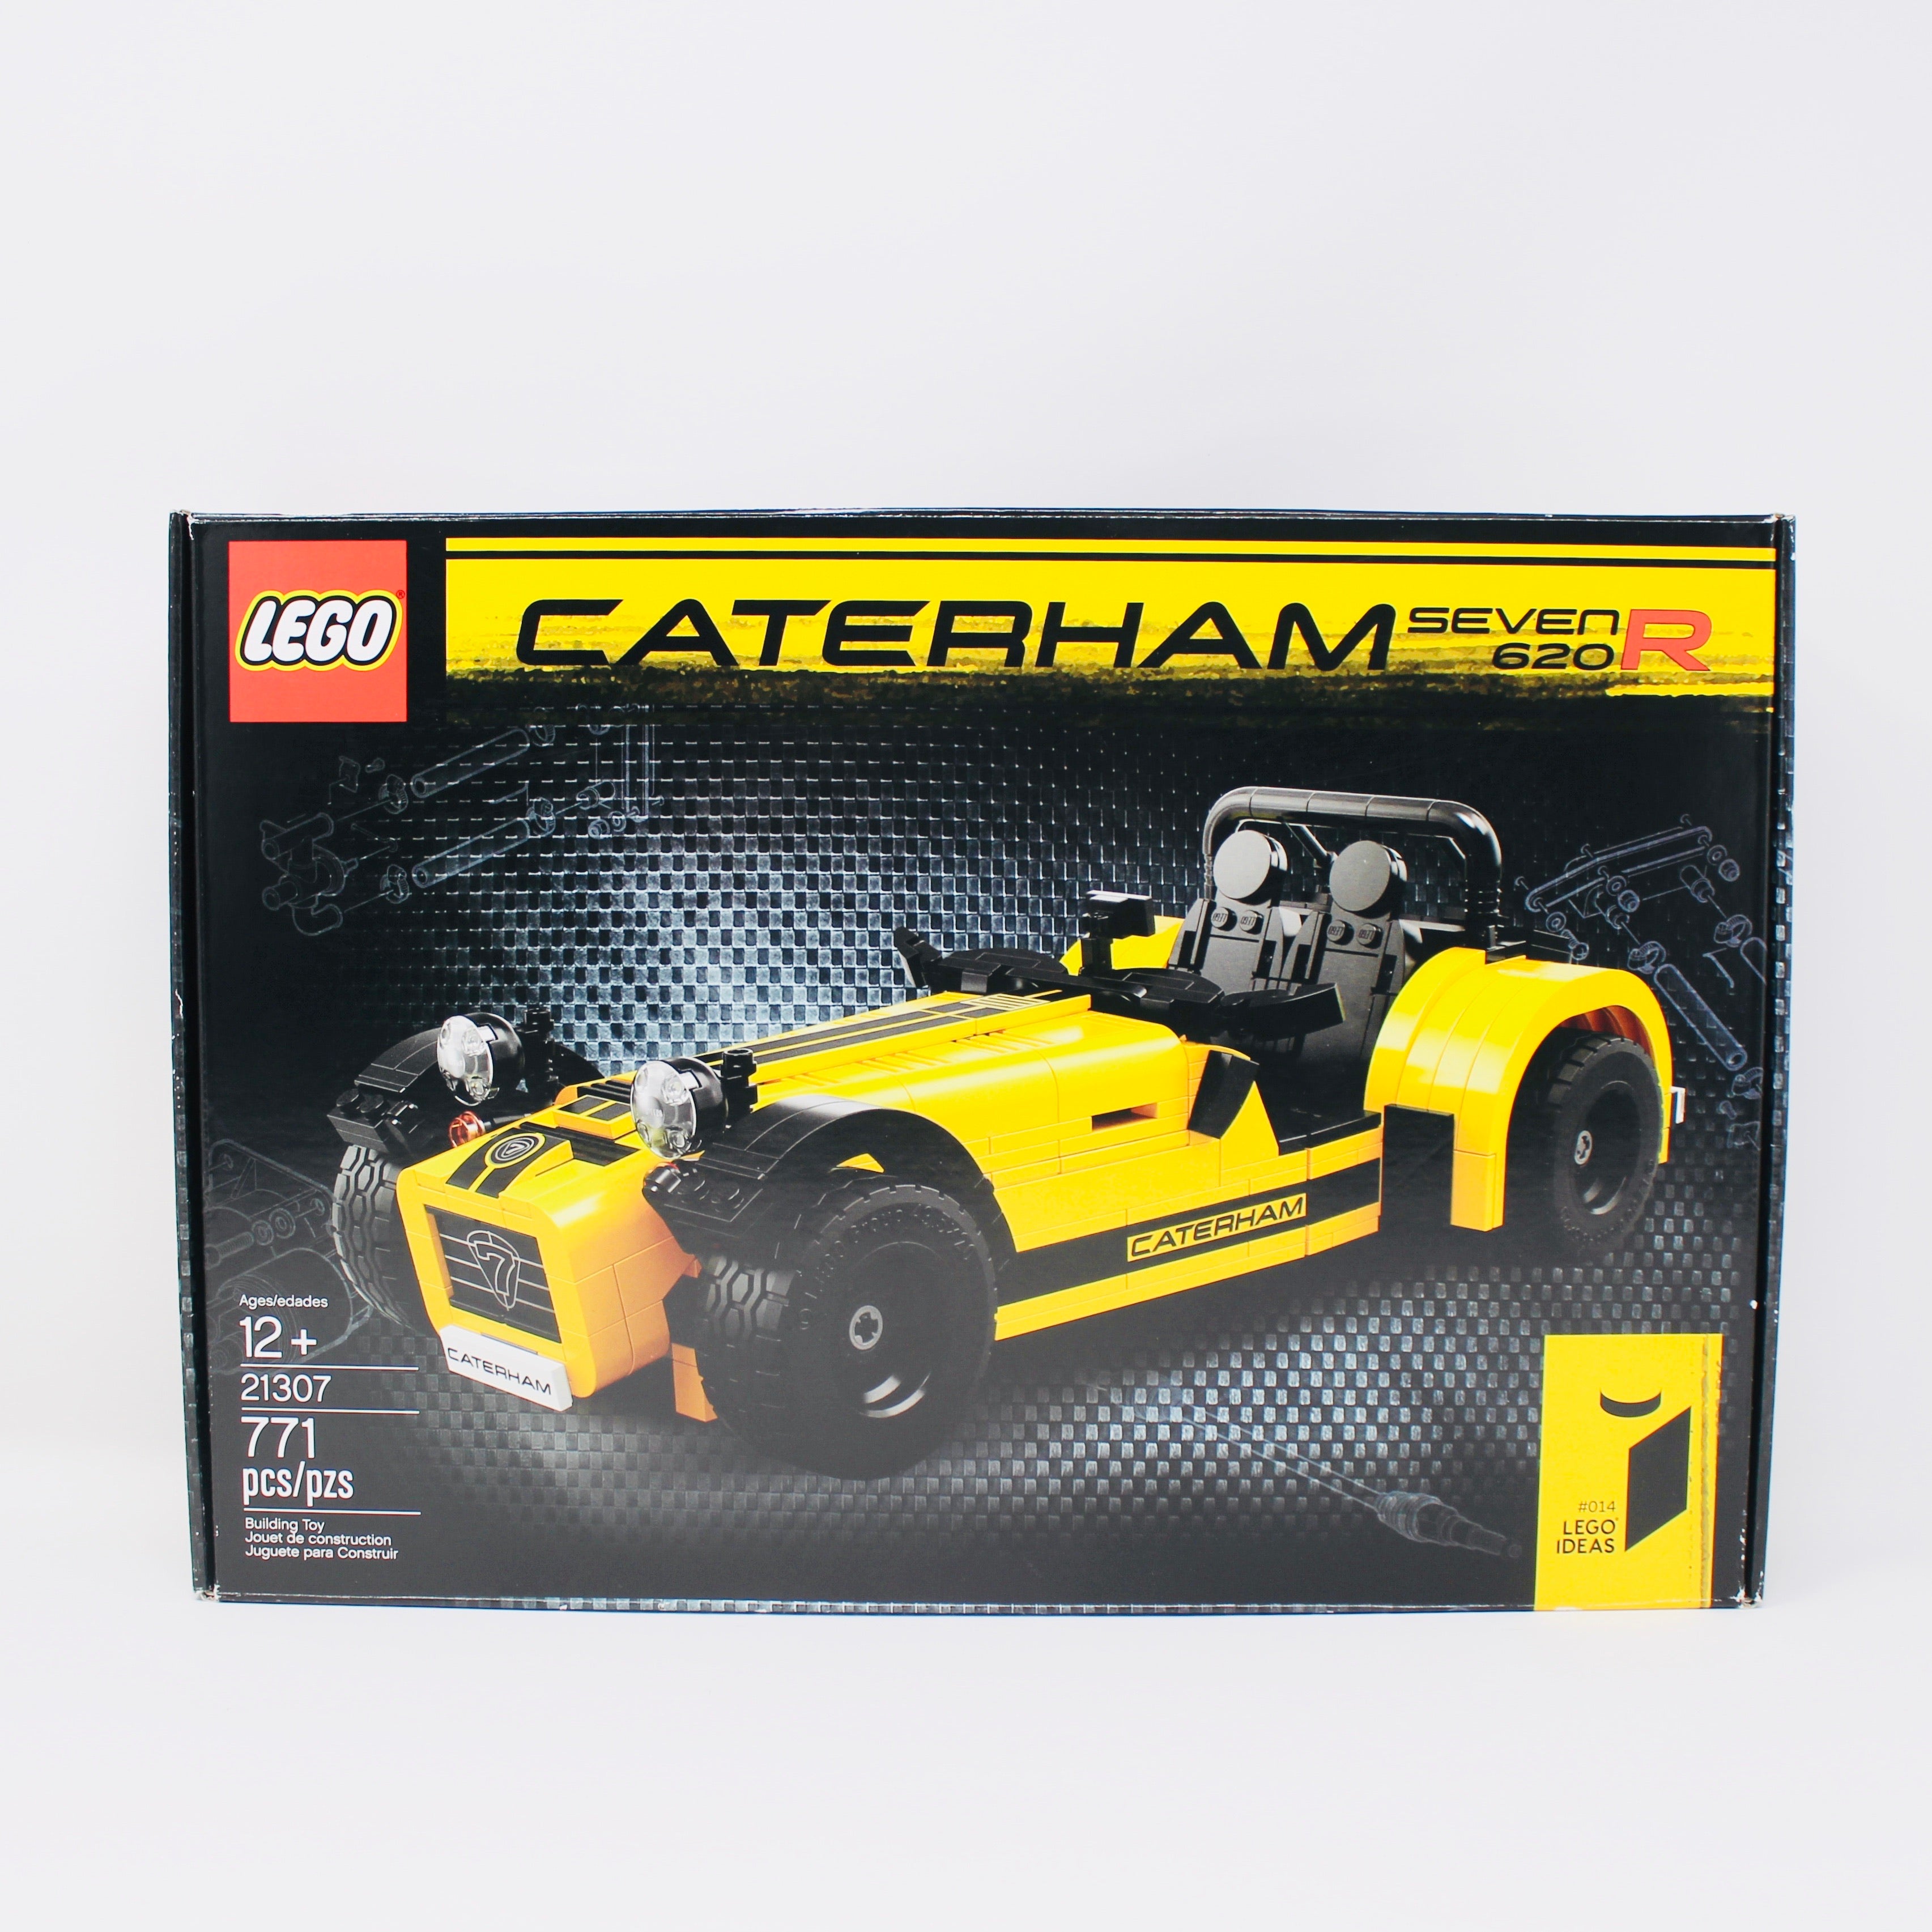 Used Set 21307 LEGO Ideas Caterham Seven 620R